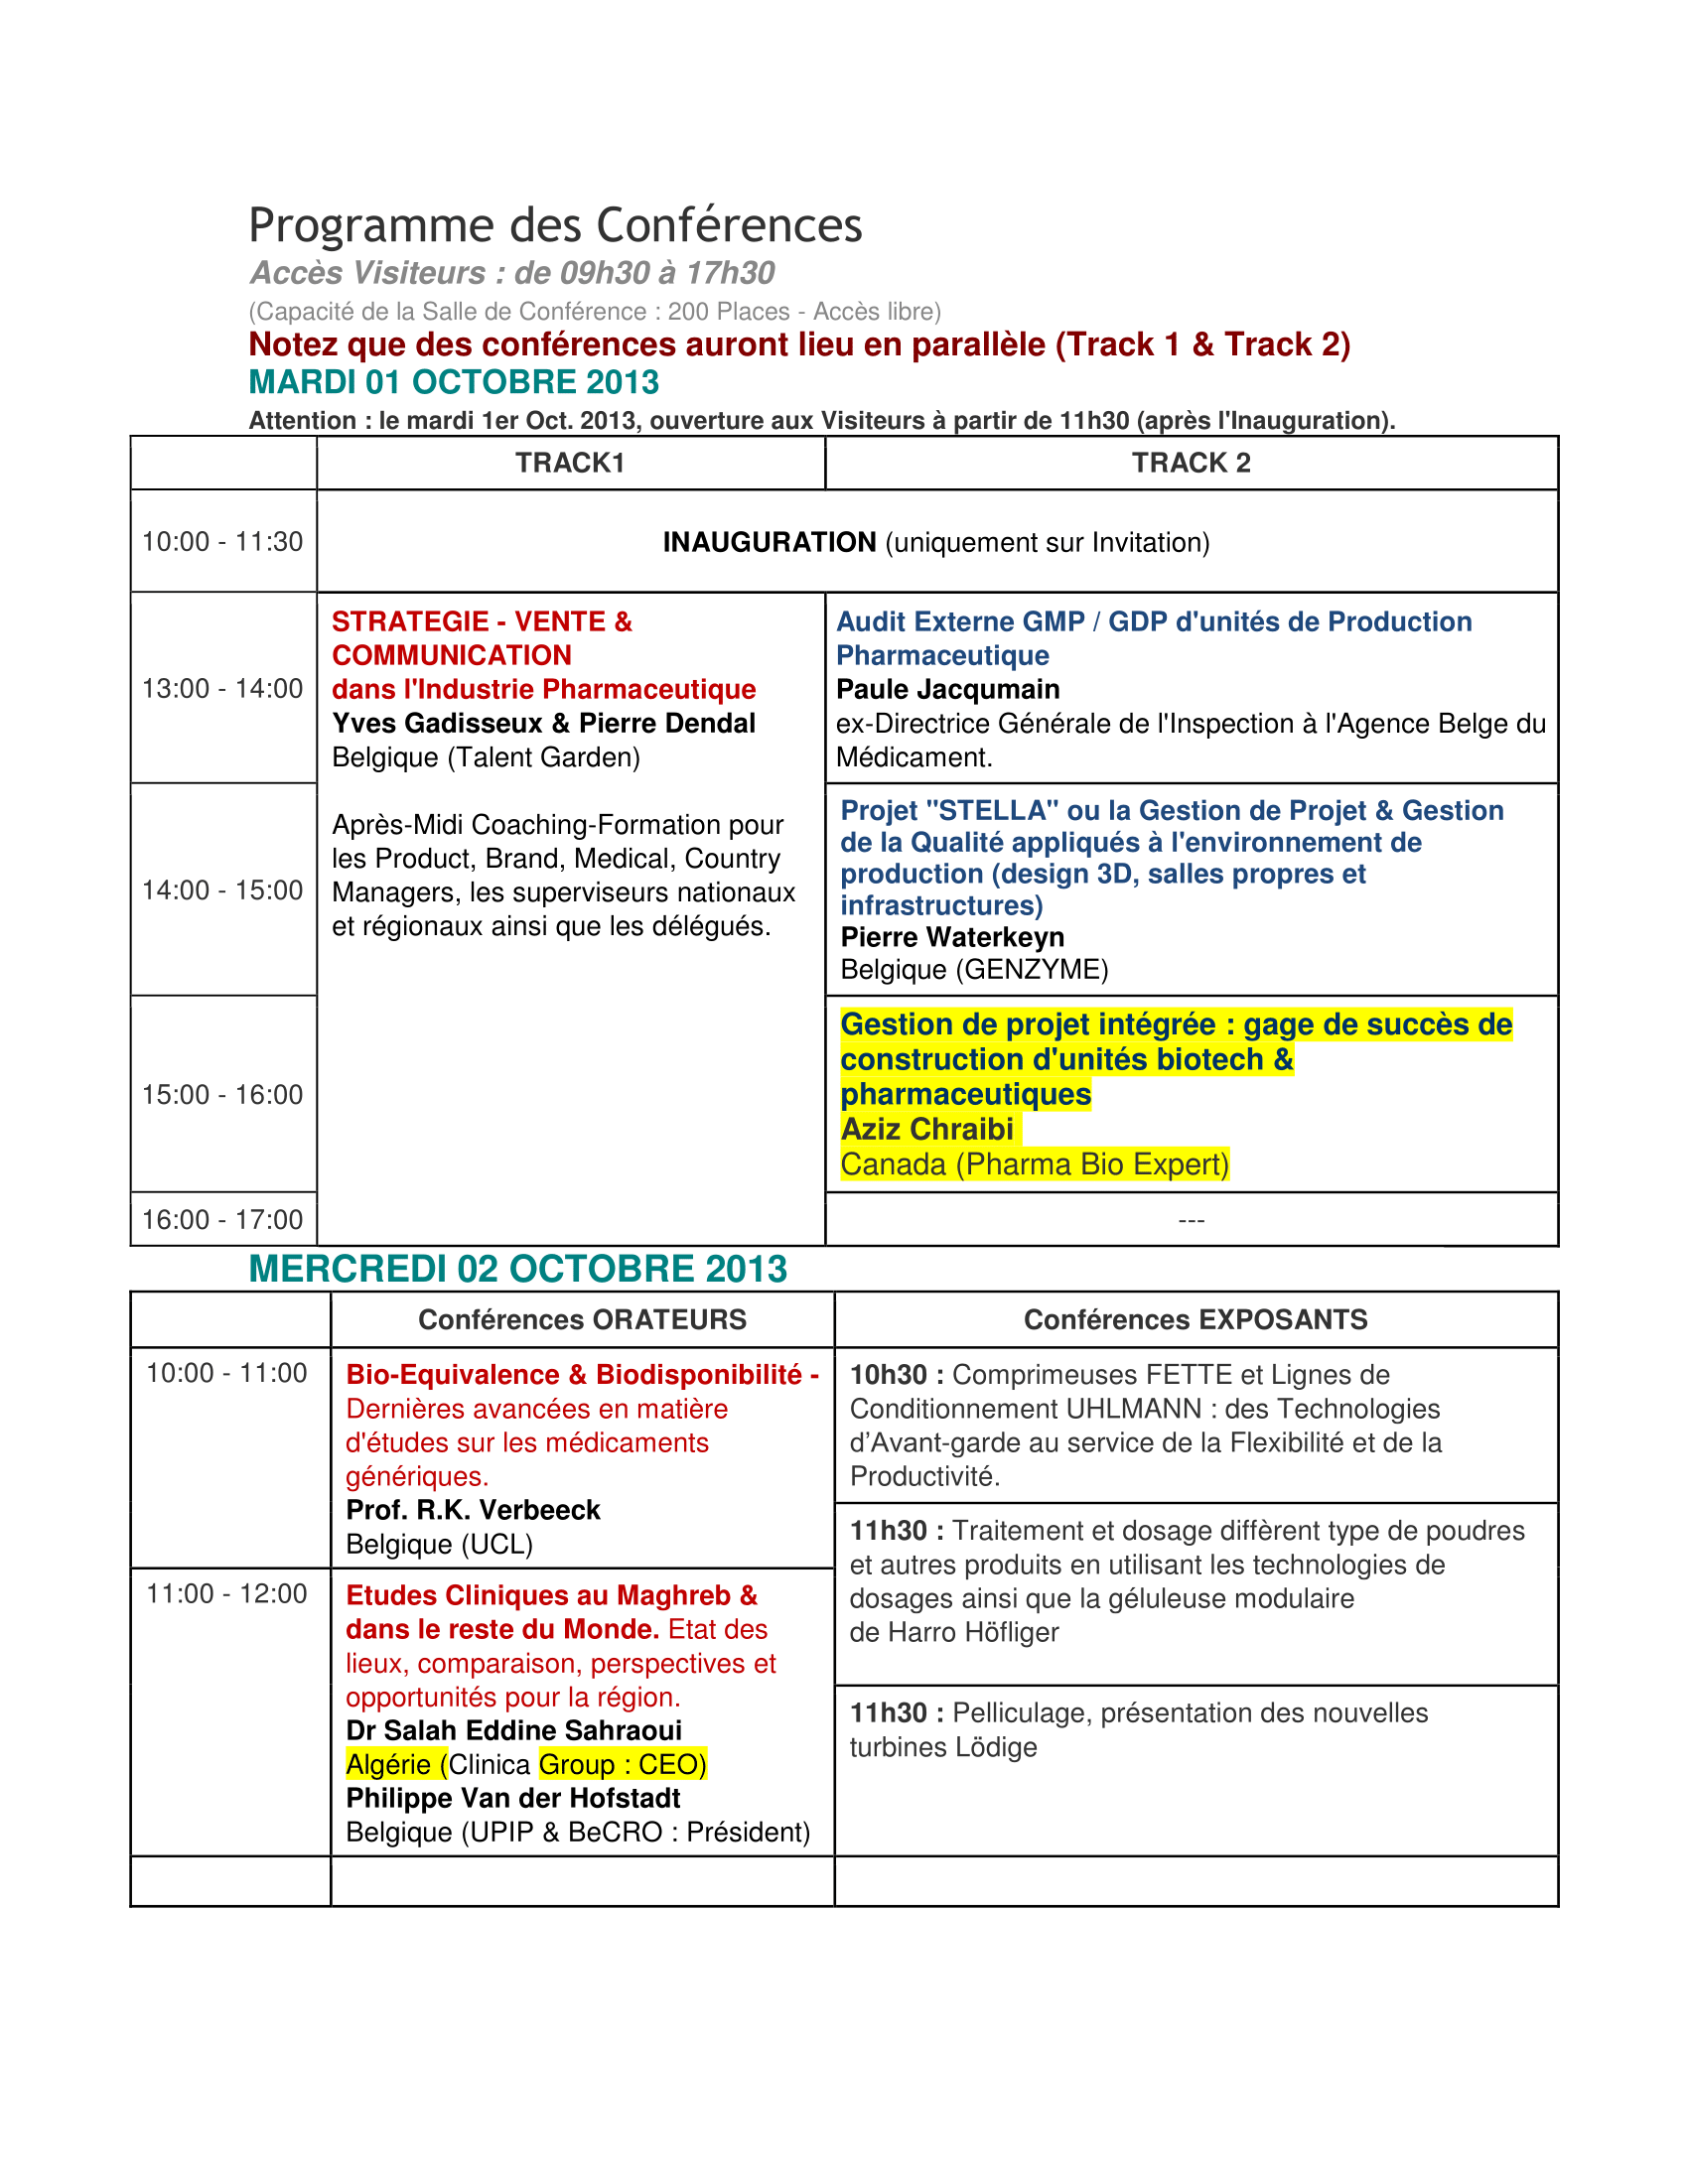 https://pbe-expert.com/wp-content/uploads/2018/04/Programme-des-Conférences_MAGHREB-PHARMA-2013-ORAN-1.png